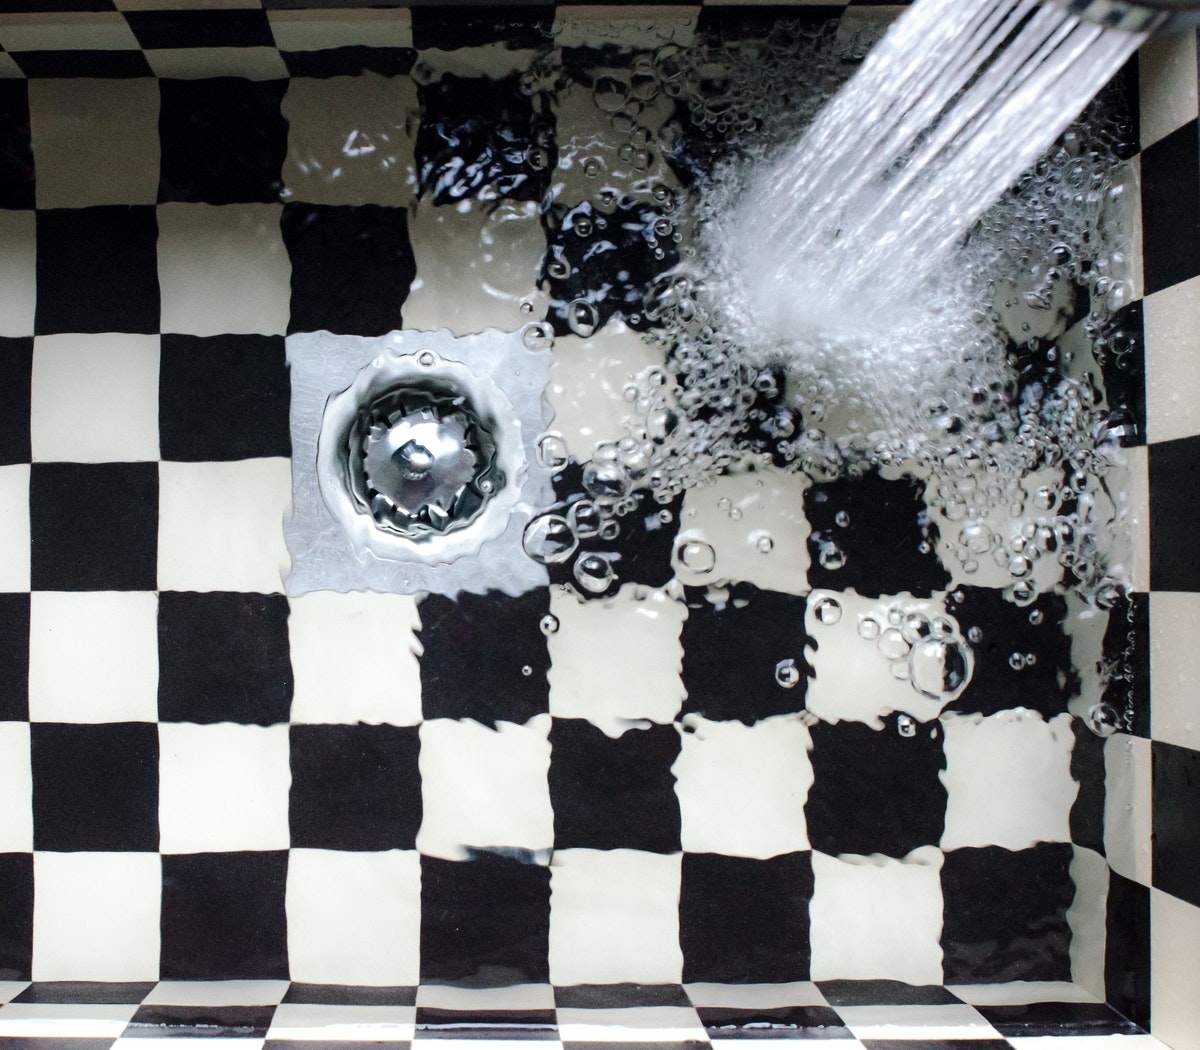 4 effective methods for gaining plumbing leads.